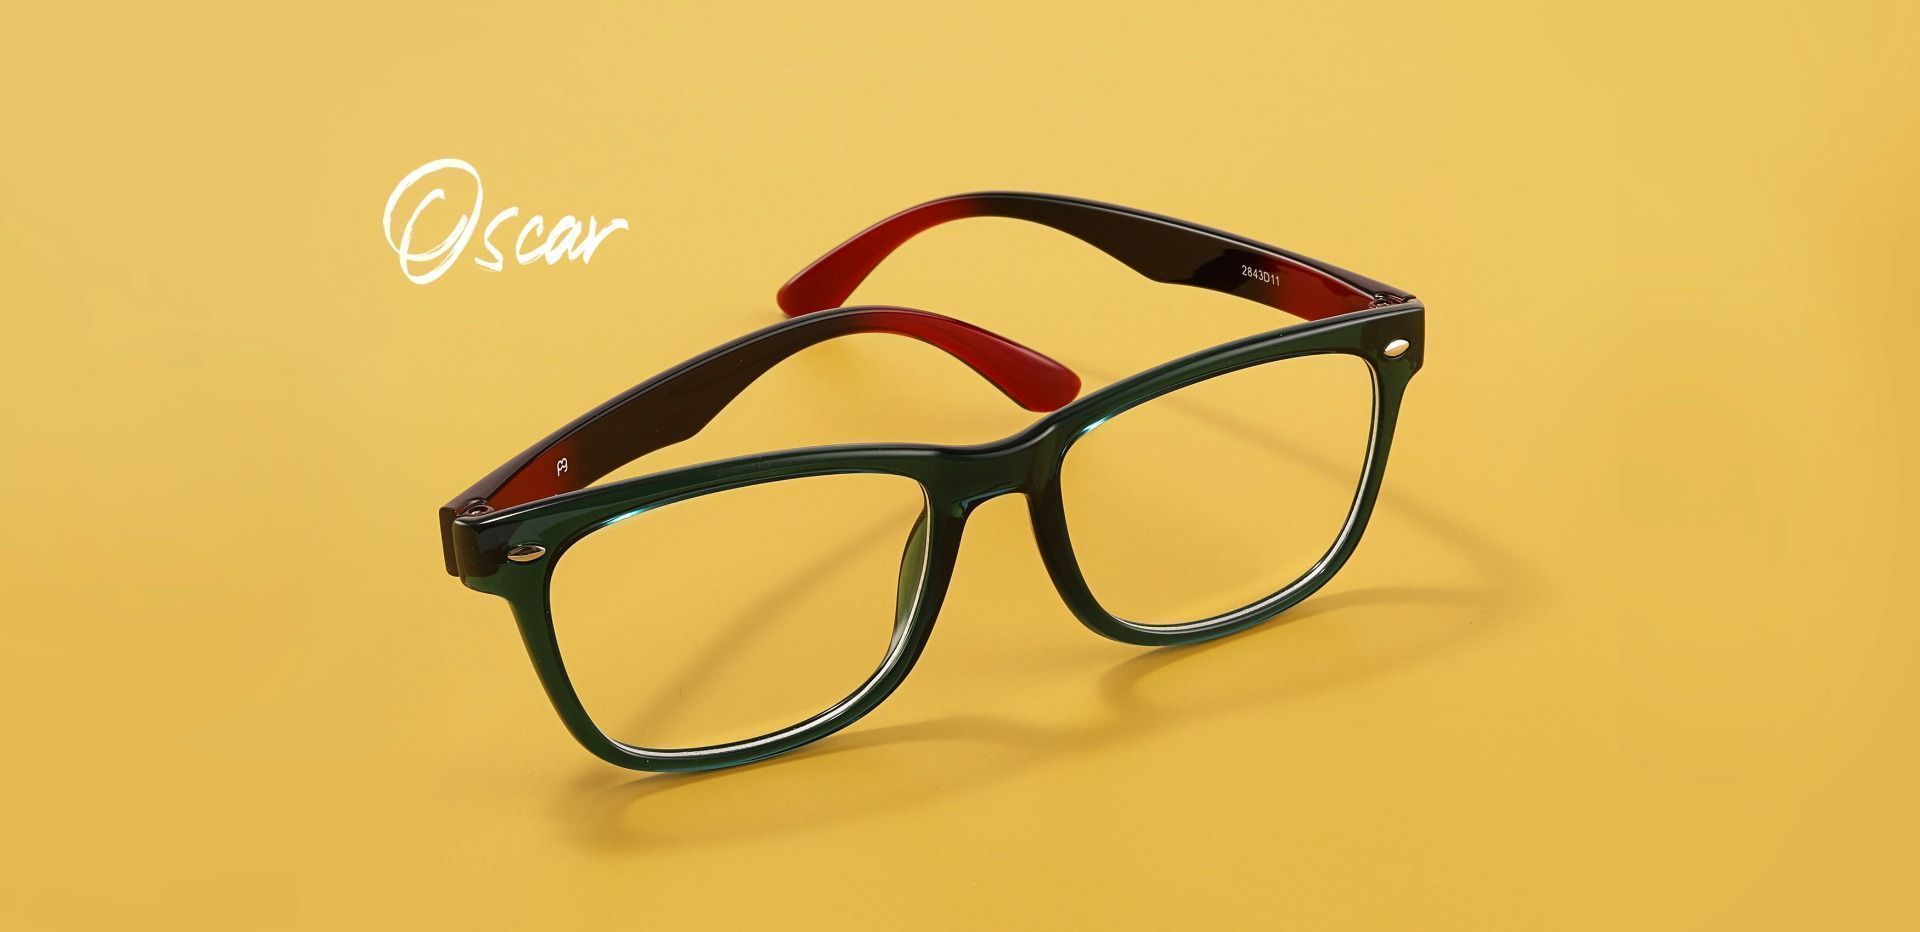 Oscar Rectangle Eyeglasses Frame - Green